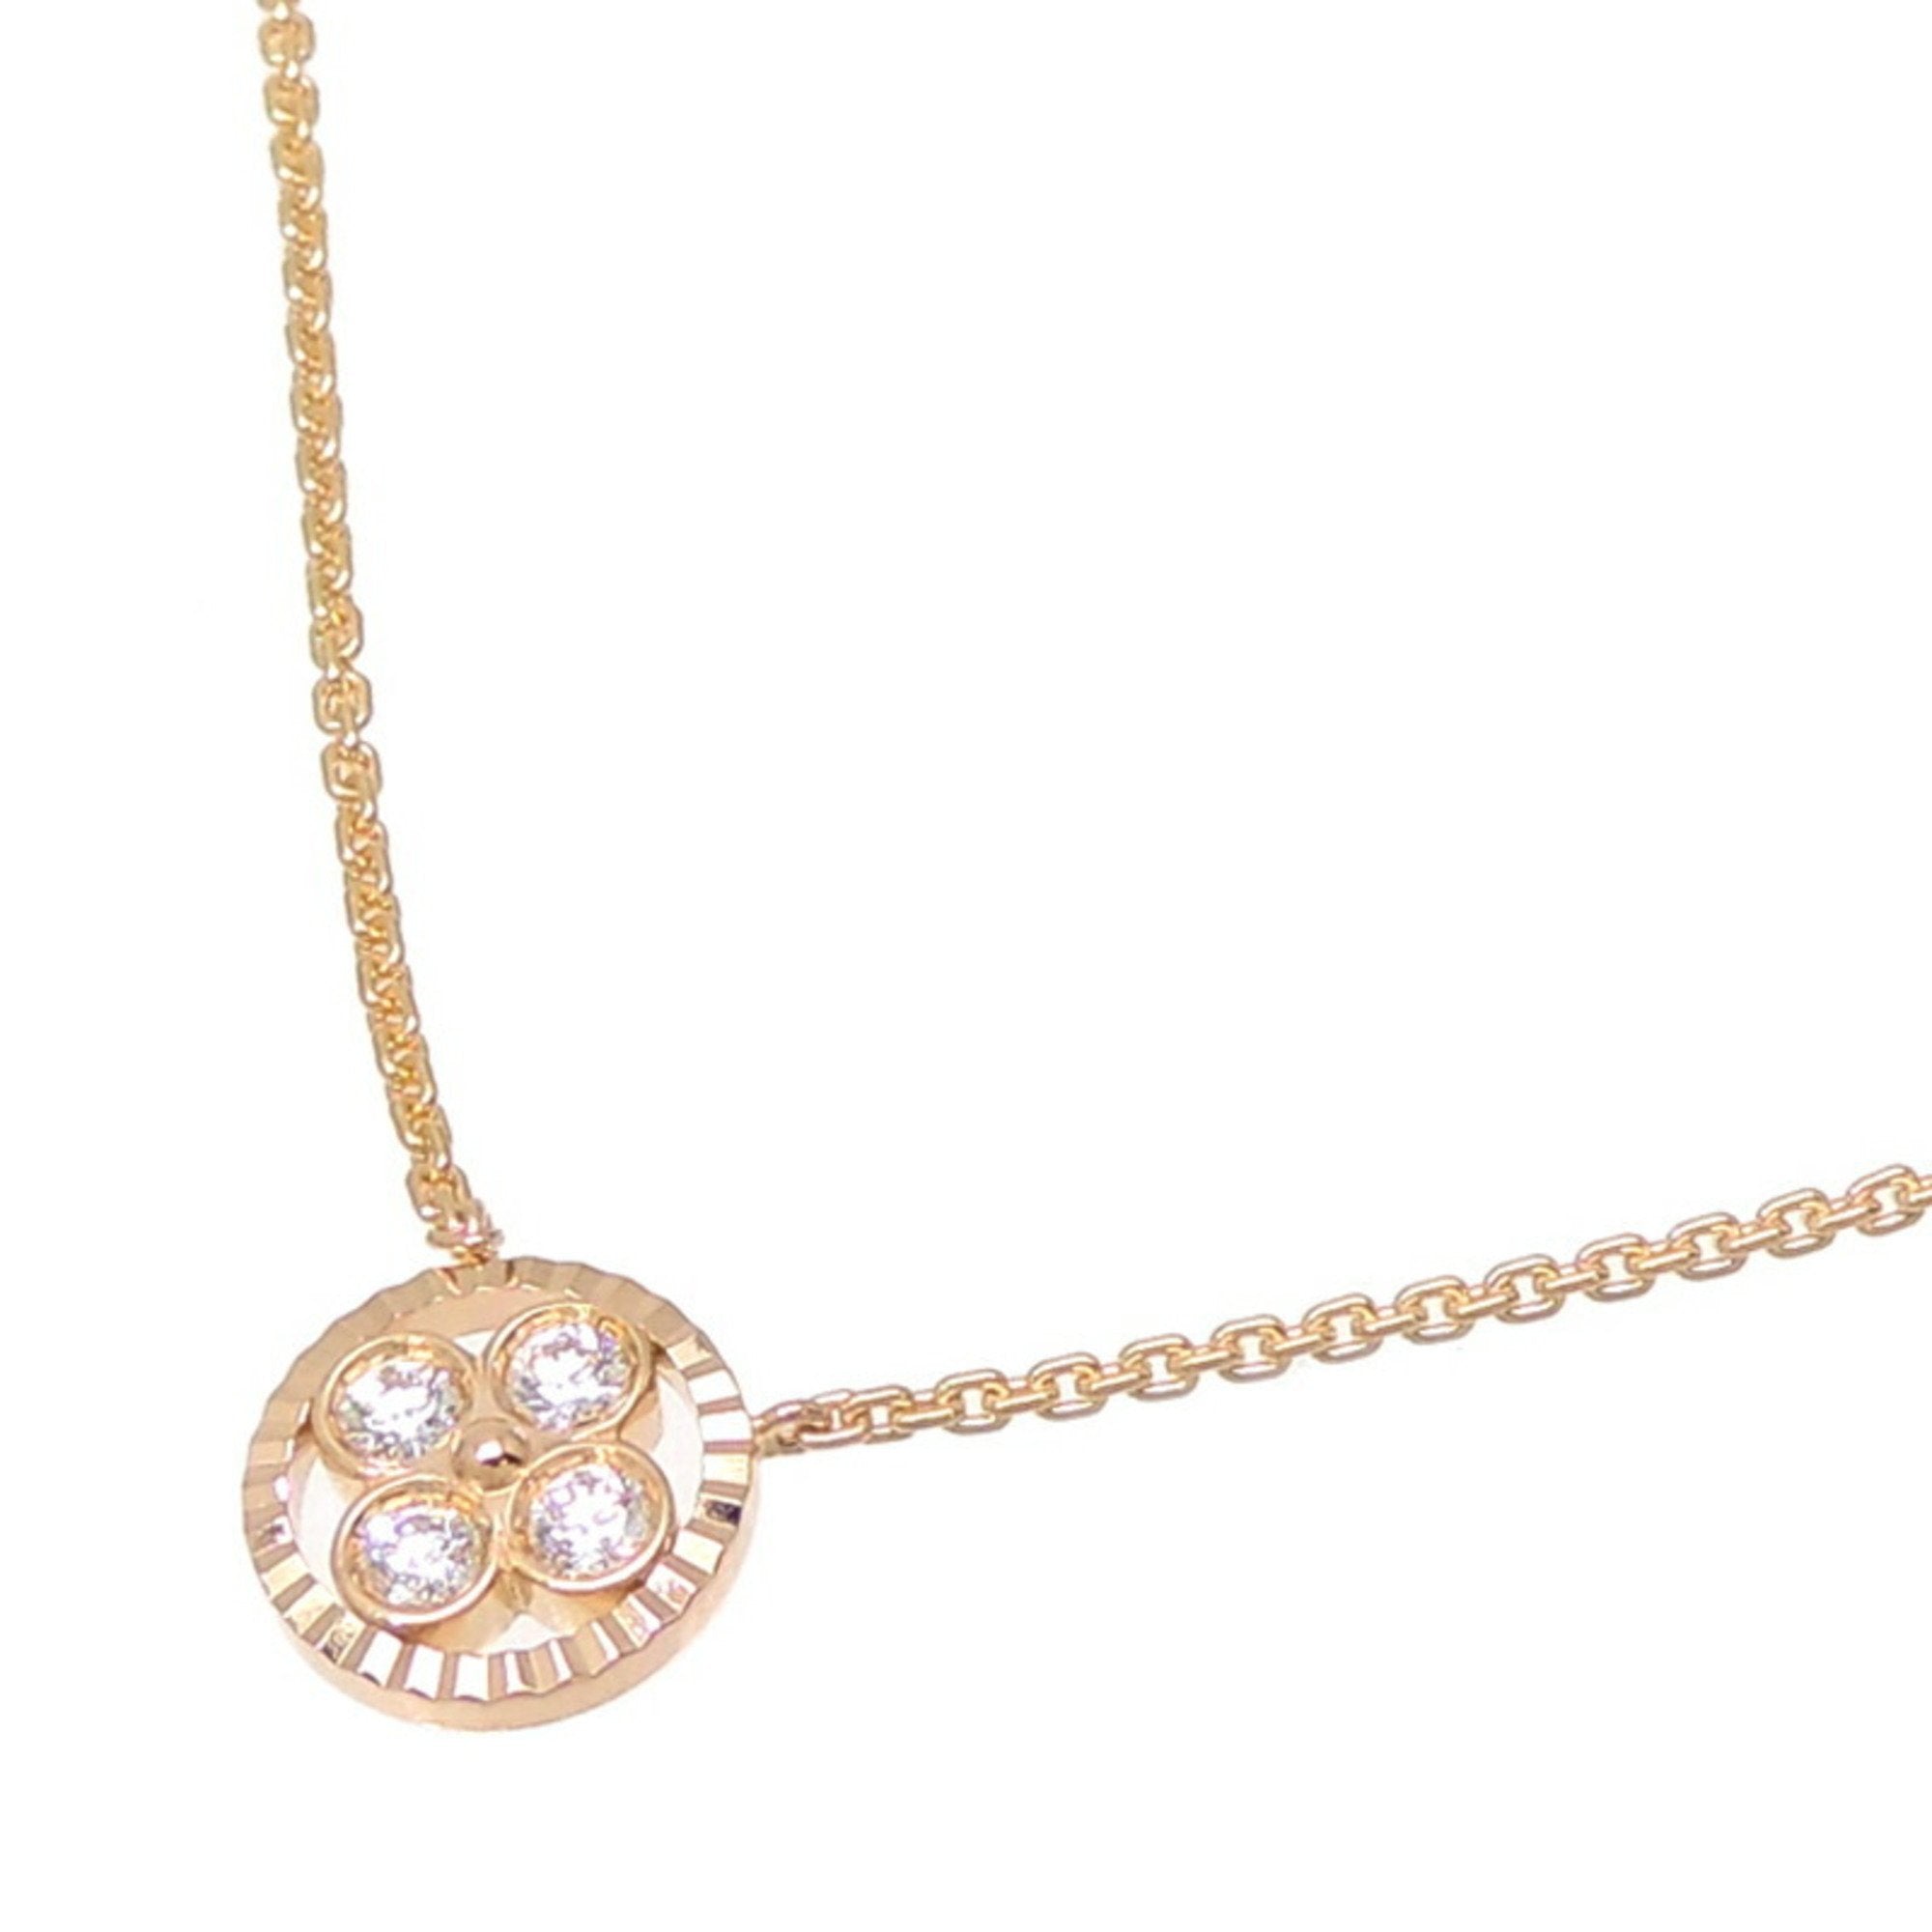 Louis Vuitton Blossom BB Pendant Necklace 18K Rose Gold with Diamonds 